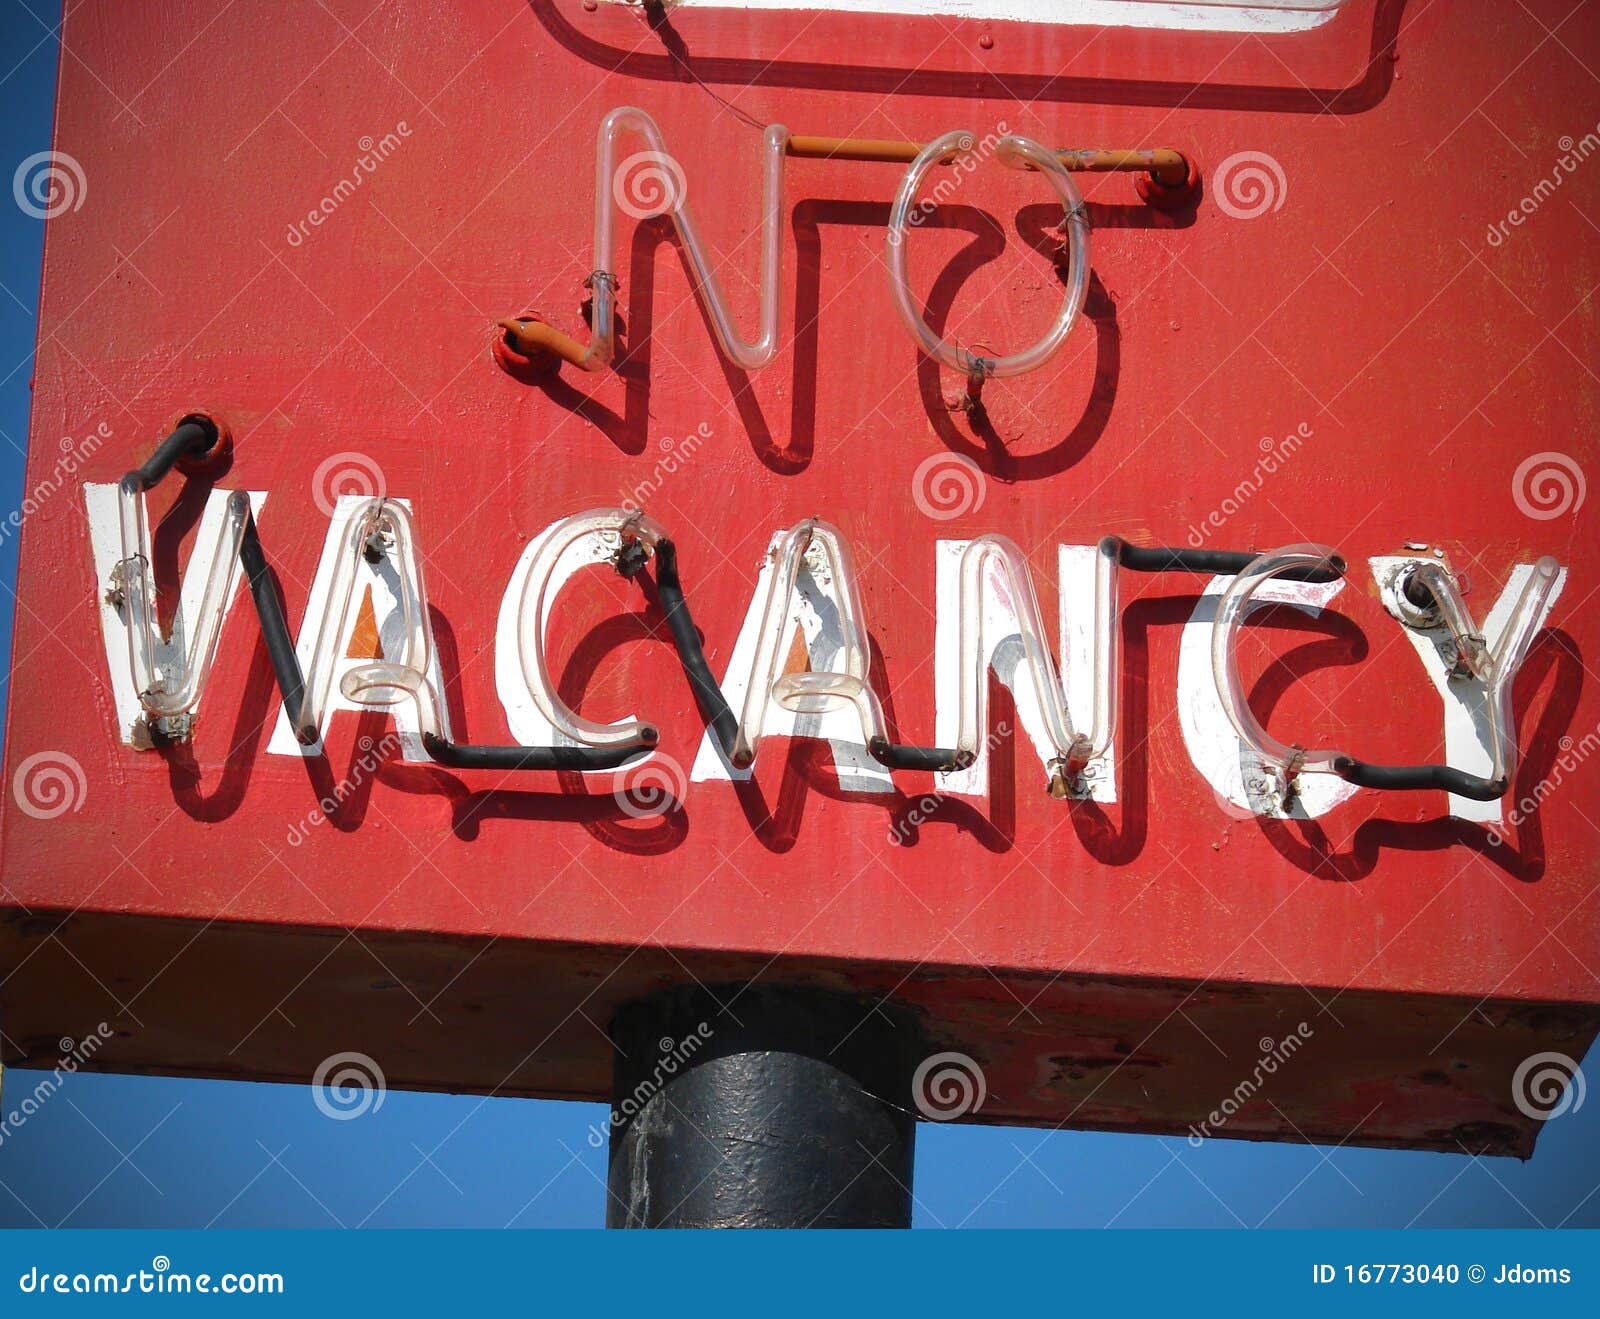 red no vacancy sign